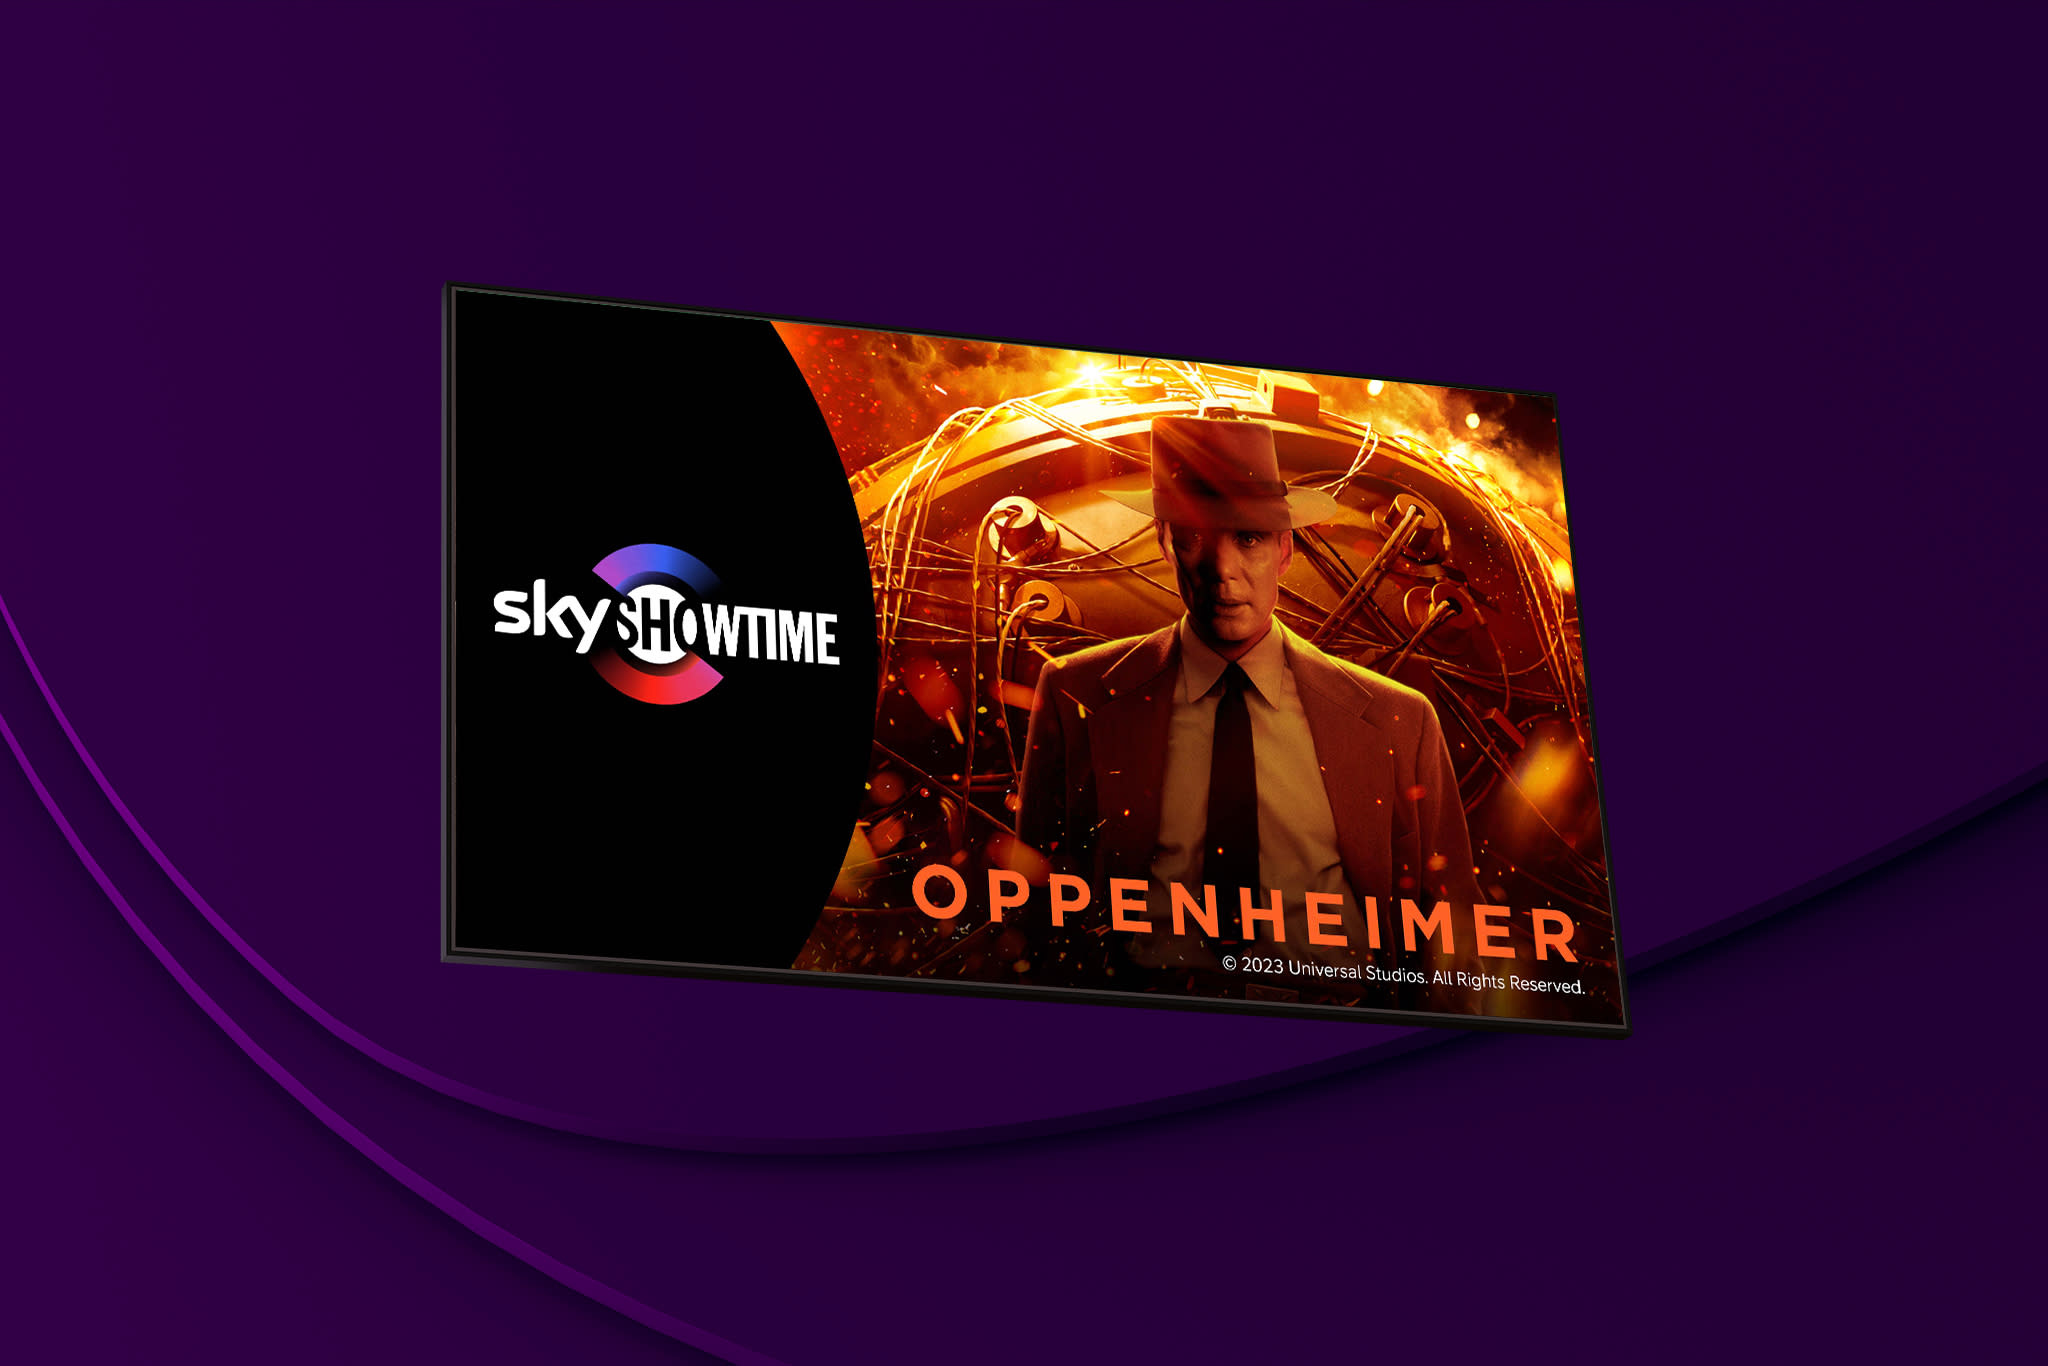 Se storfilmen Oppenheimer av Christopher Nolan på Skyshowtime i mars. Bara en av många premiärer denna månad.